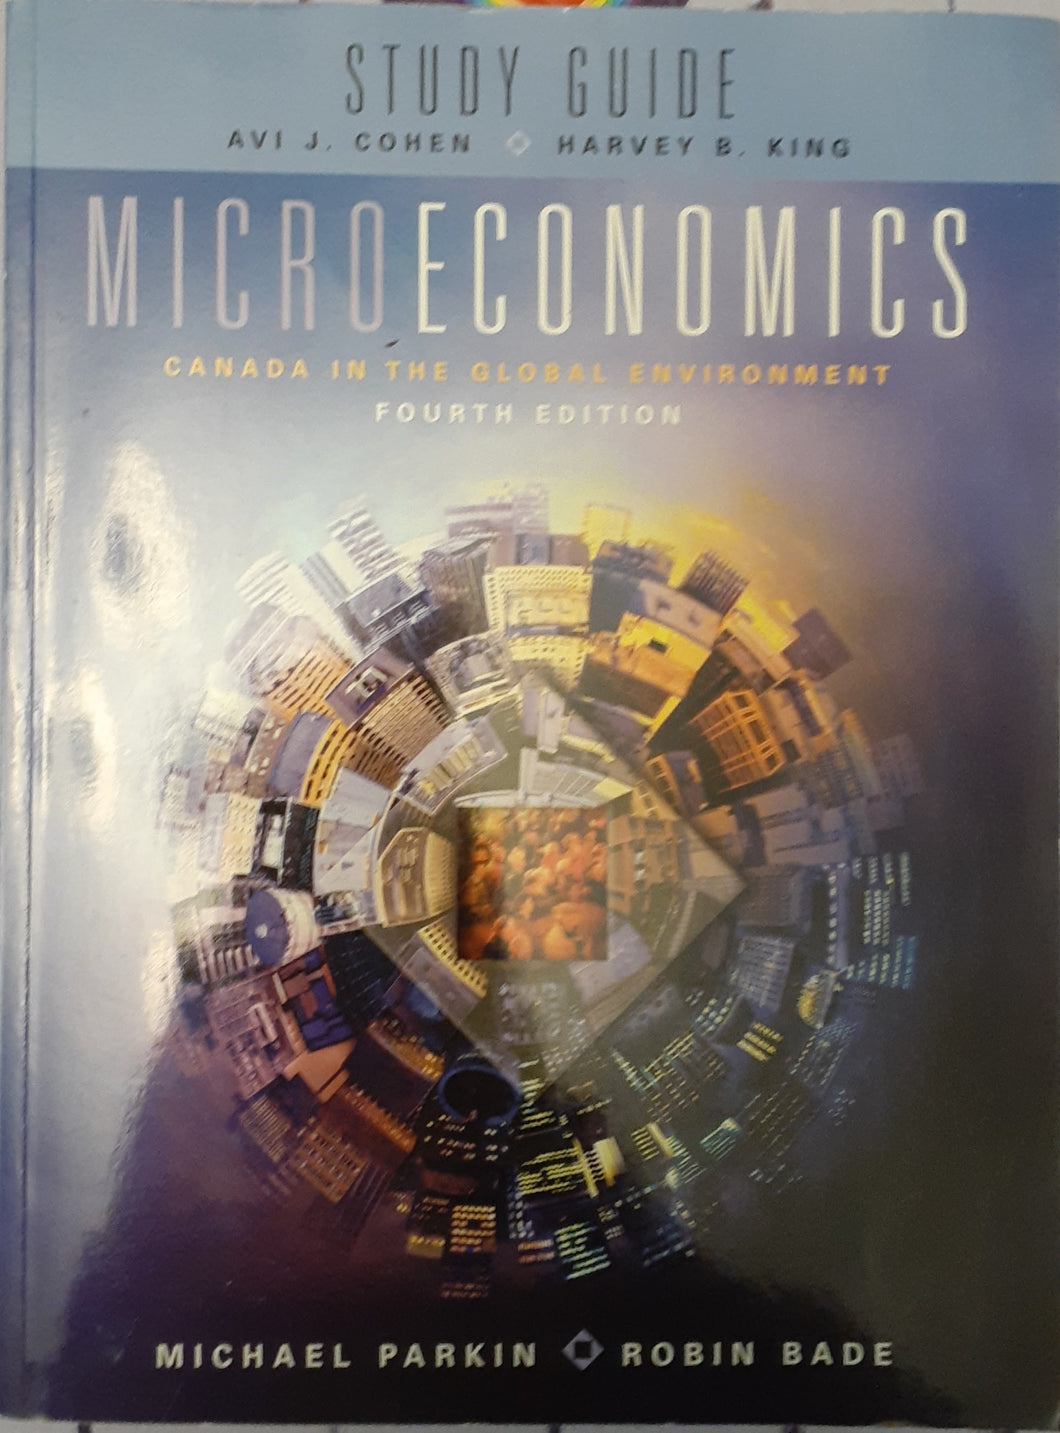 Microeconomics - Study Guide